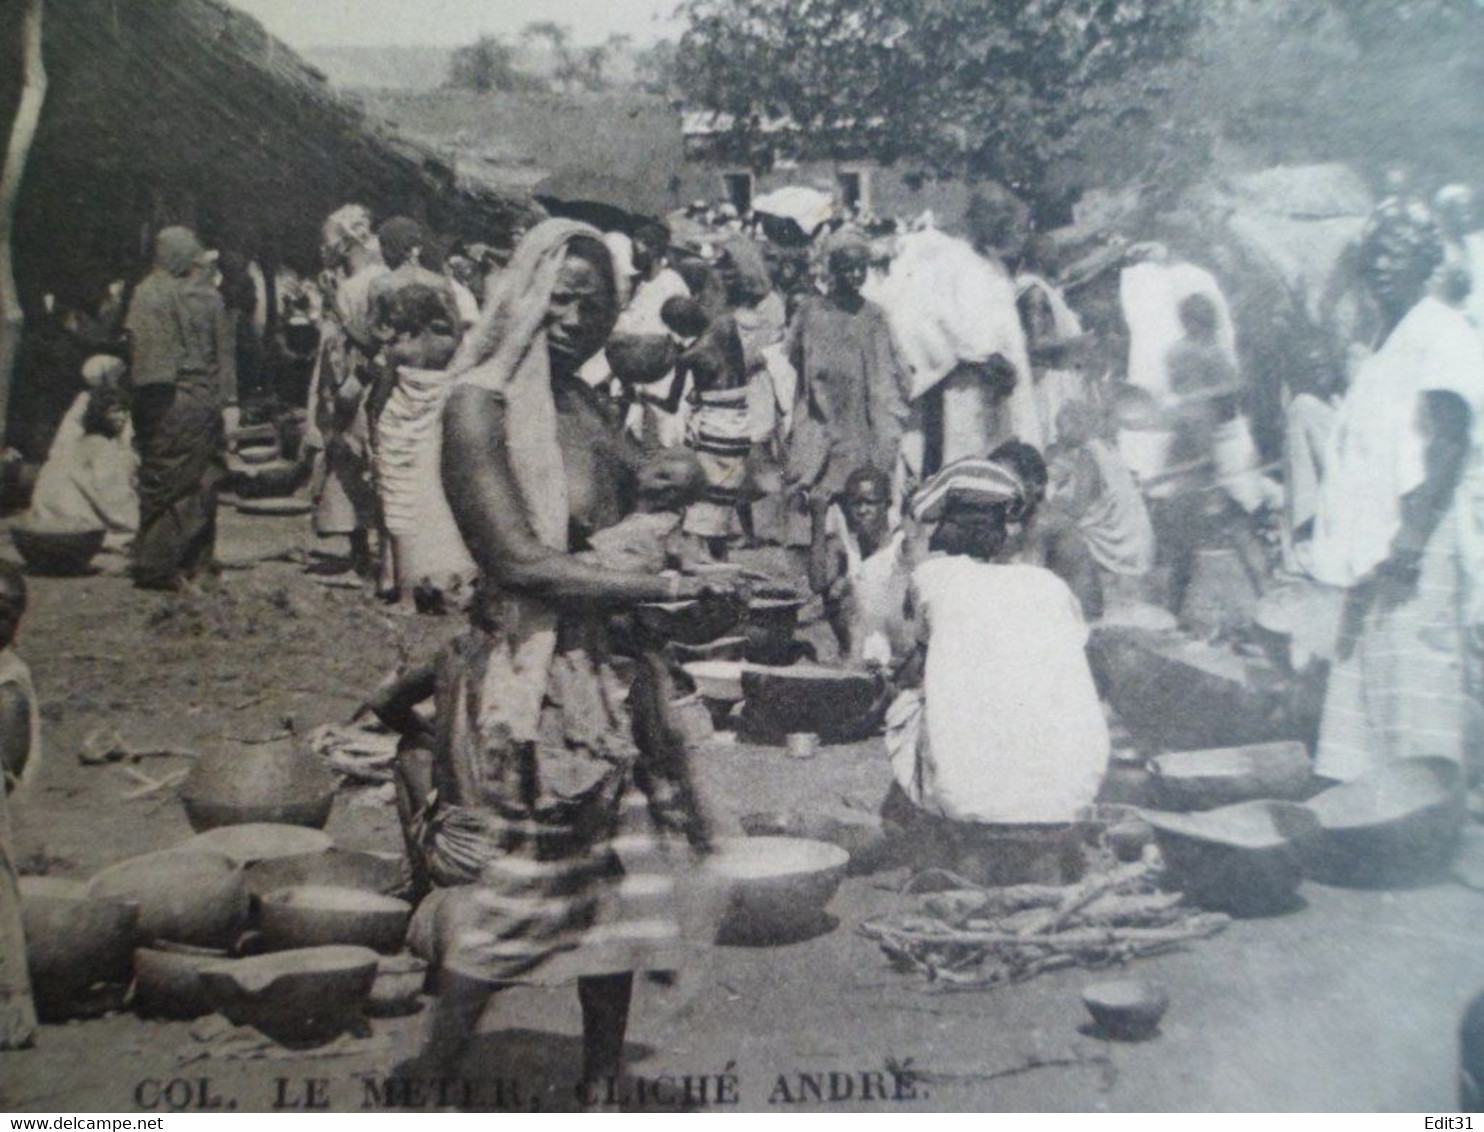 CPA - +ou- 1924 - Soudan  Francais - KATI - Le Marché - Sudan